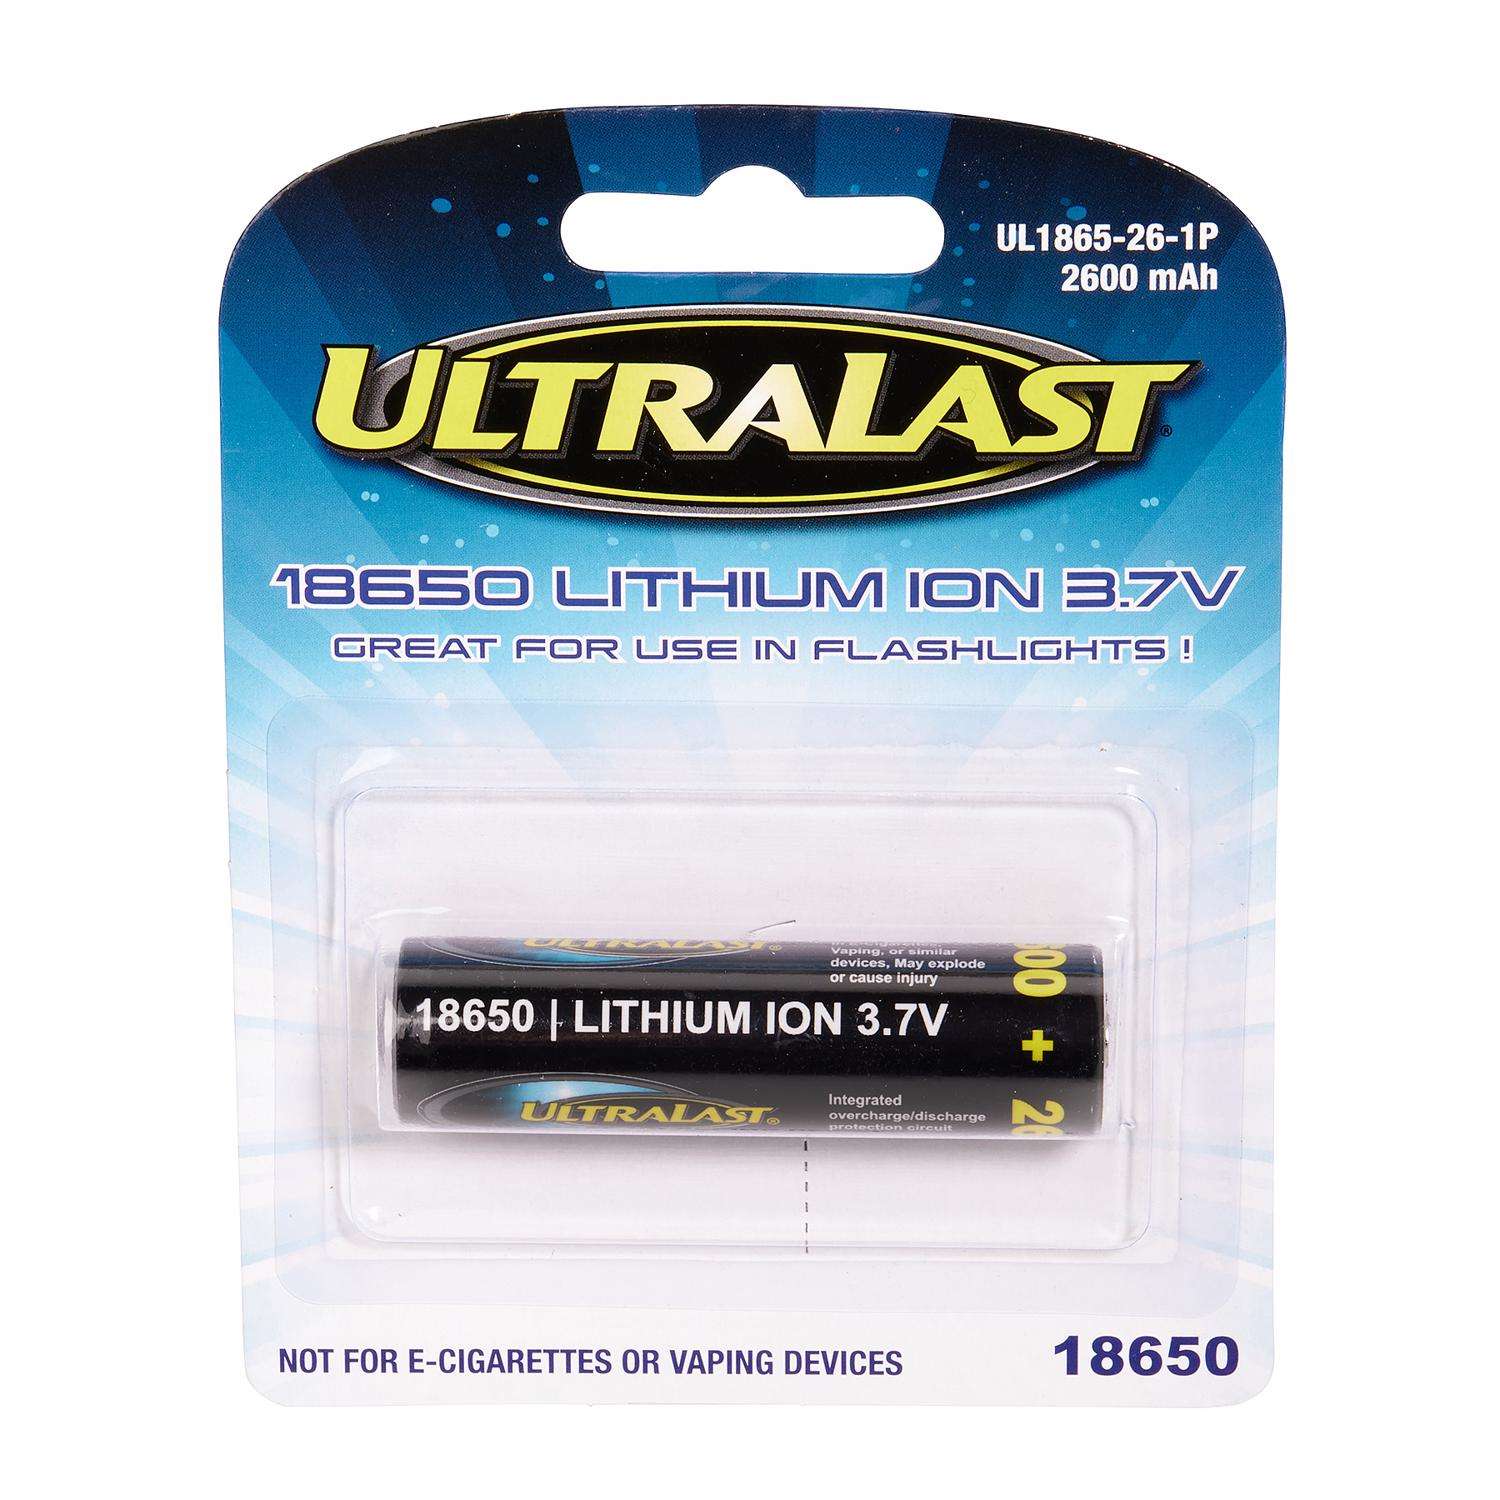 menu Gemengd Reproduceren Ultralast Lithium Ion 18650 3.7 V 2600 Ah Rechargeable Battery UL1865-26-1P  1 pk - Ace Hardware